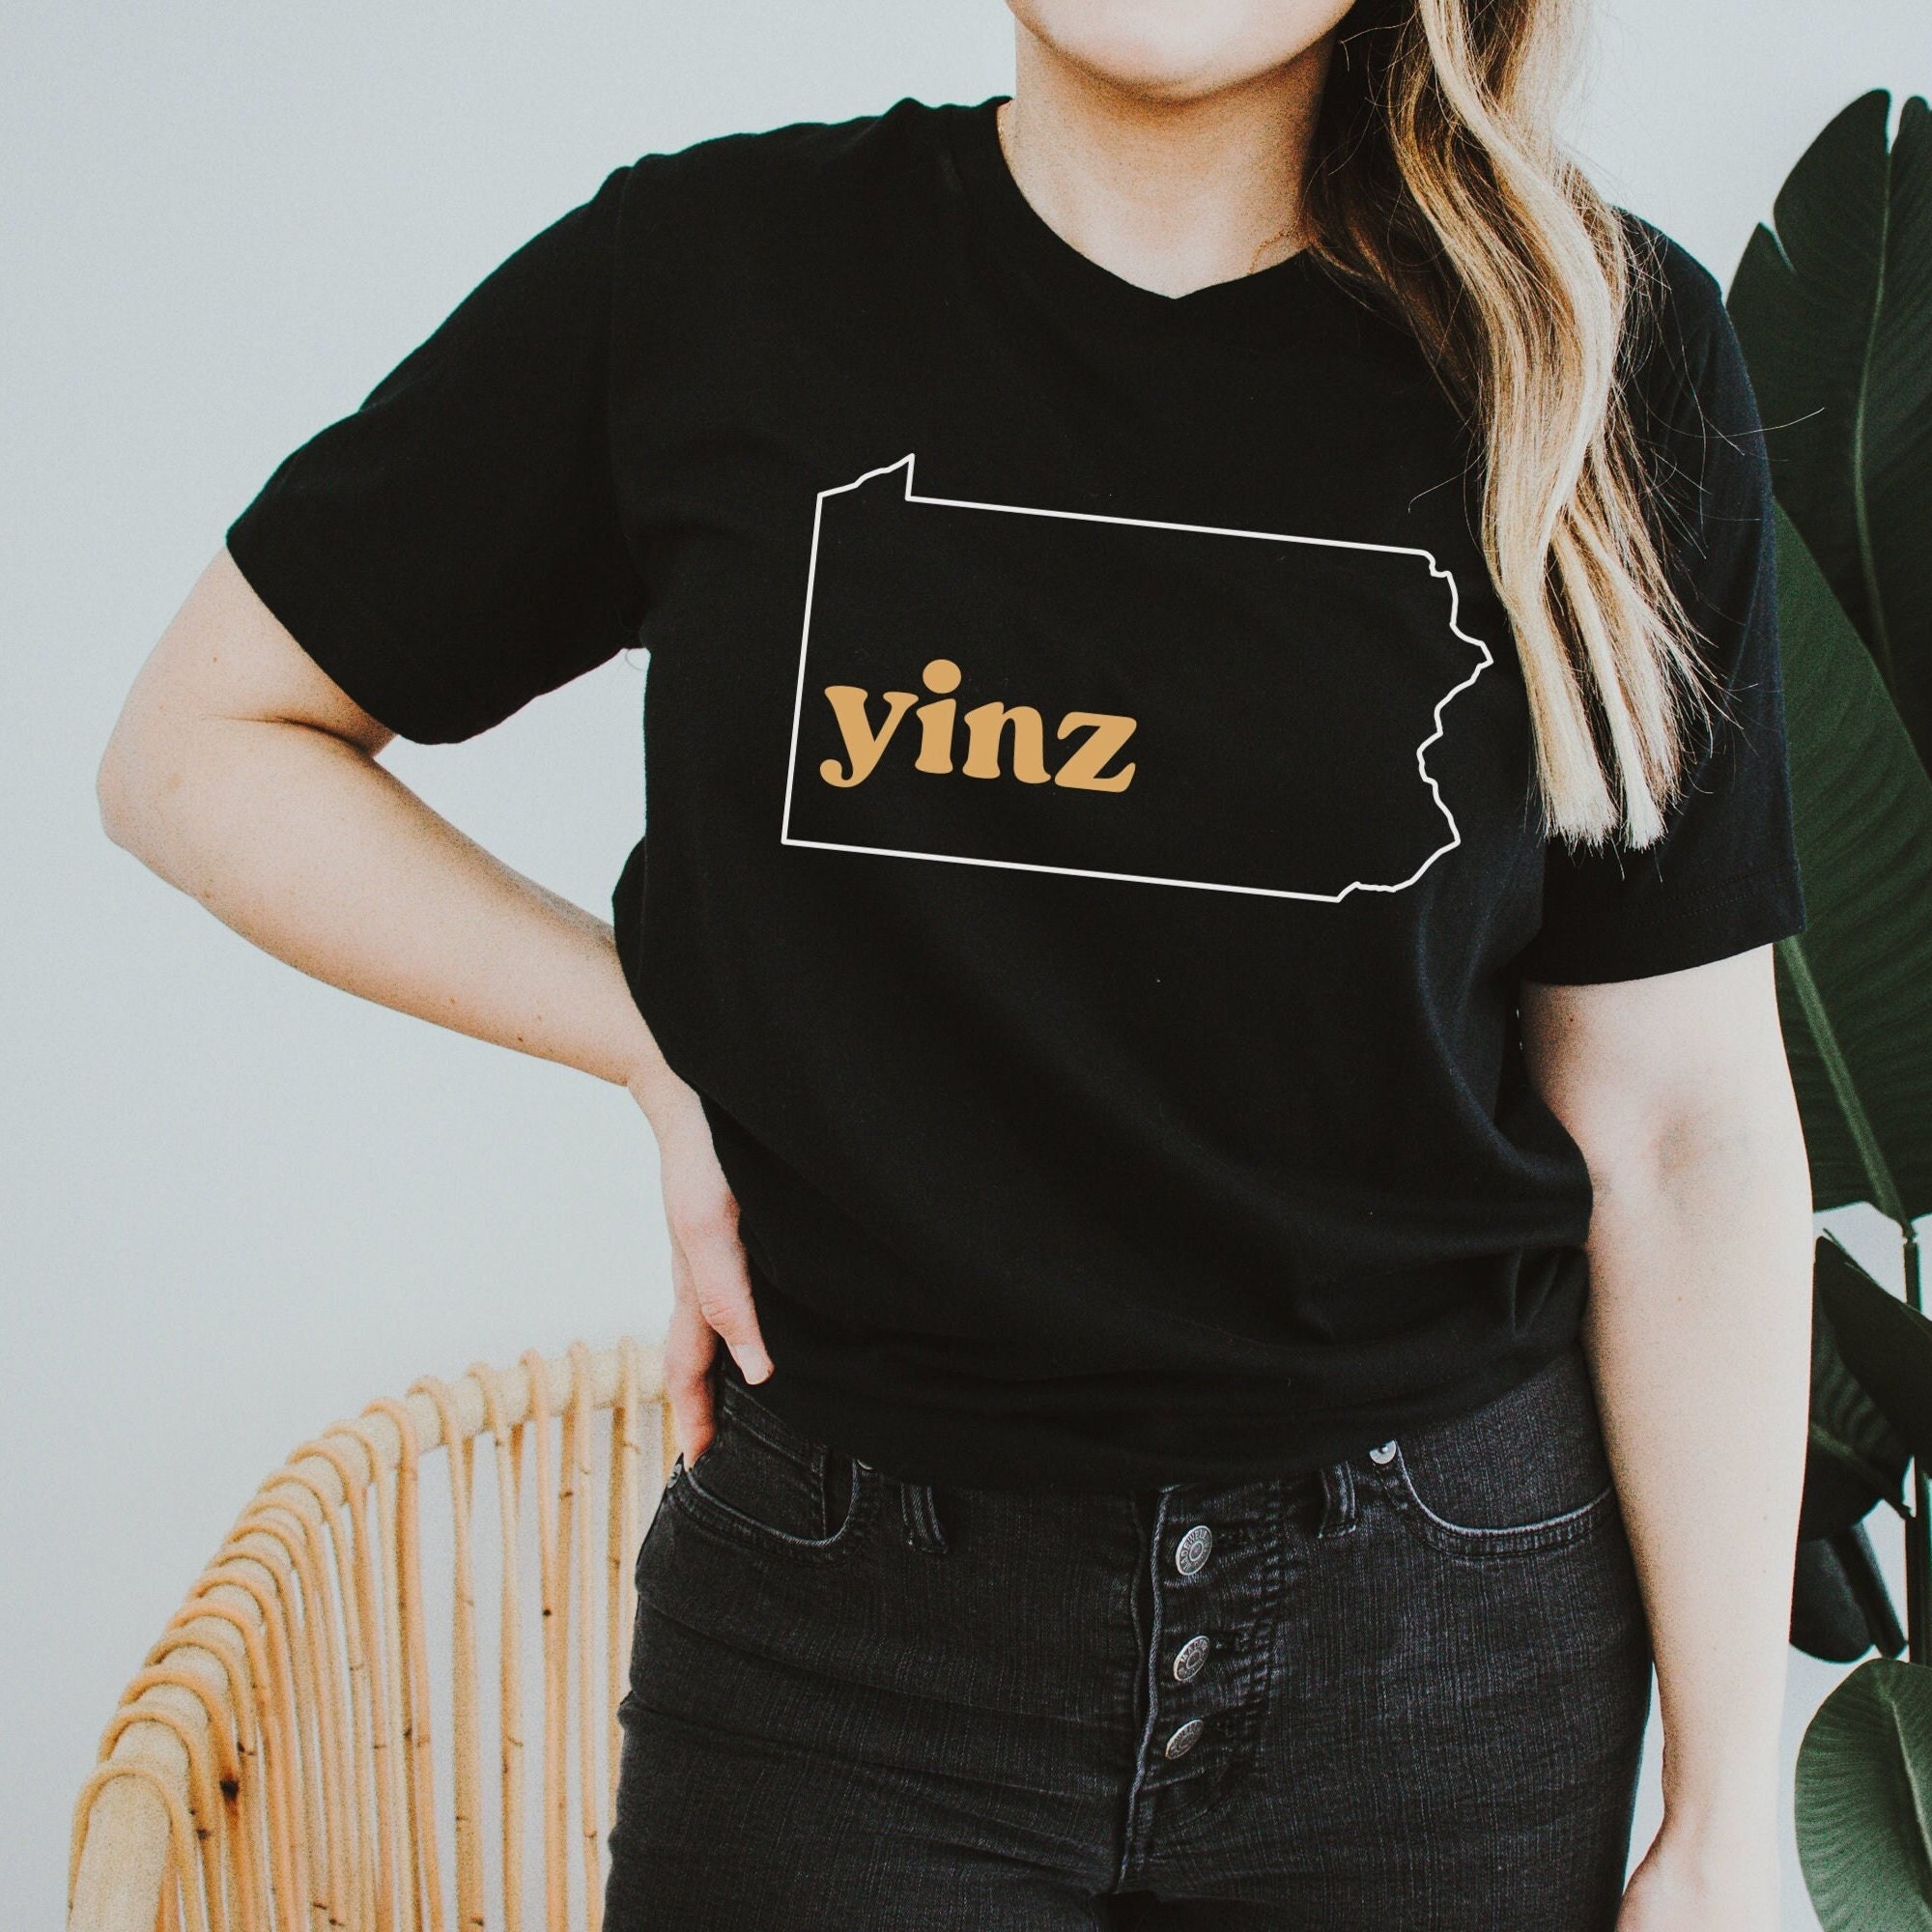 Yinzer Shirt 